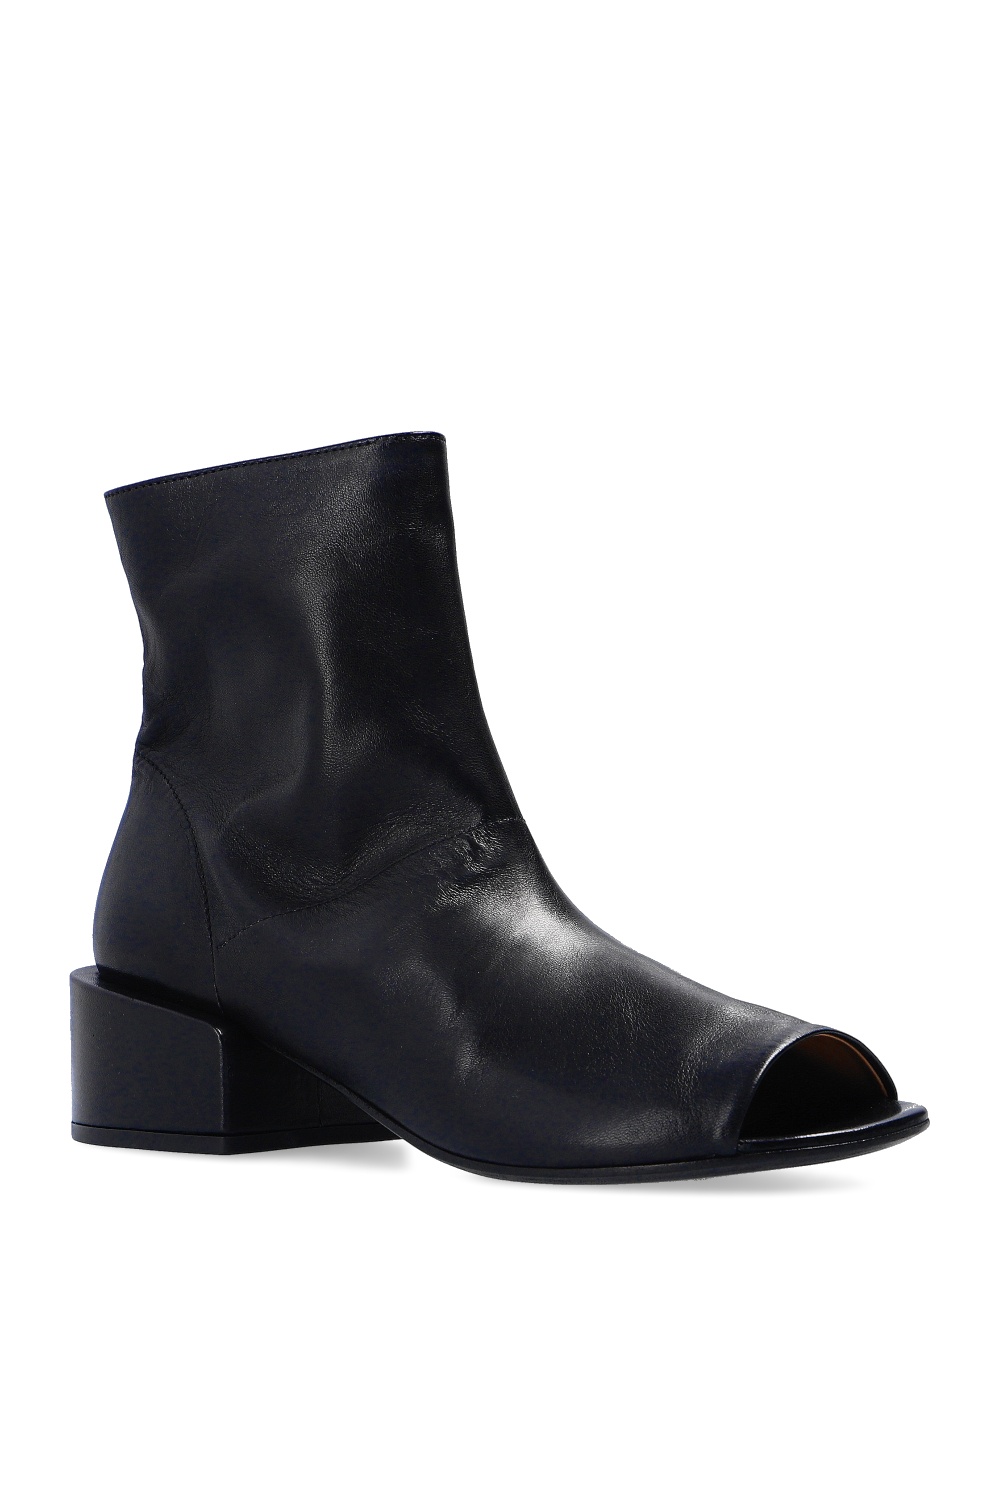 Marsell ‘Sbucciata’ open-toe boots